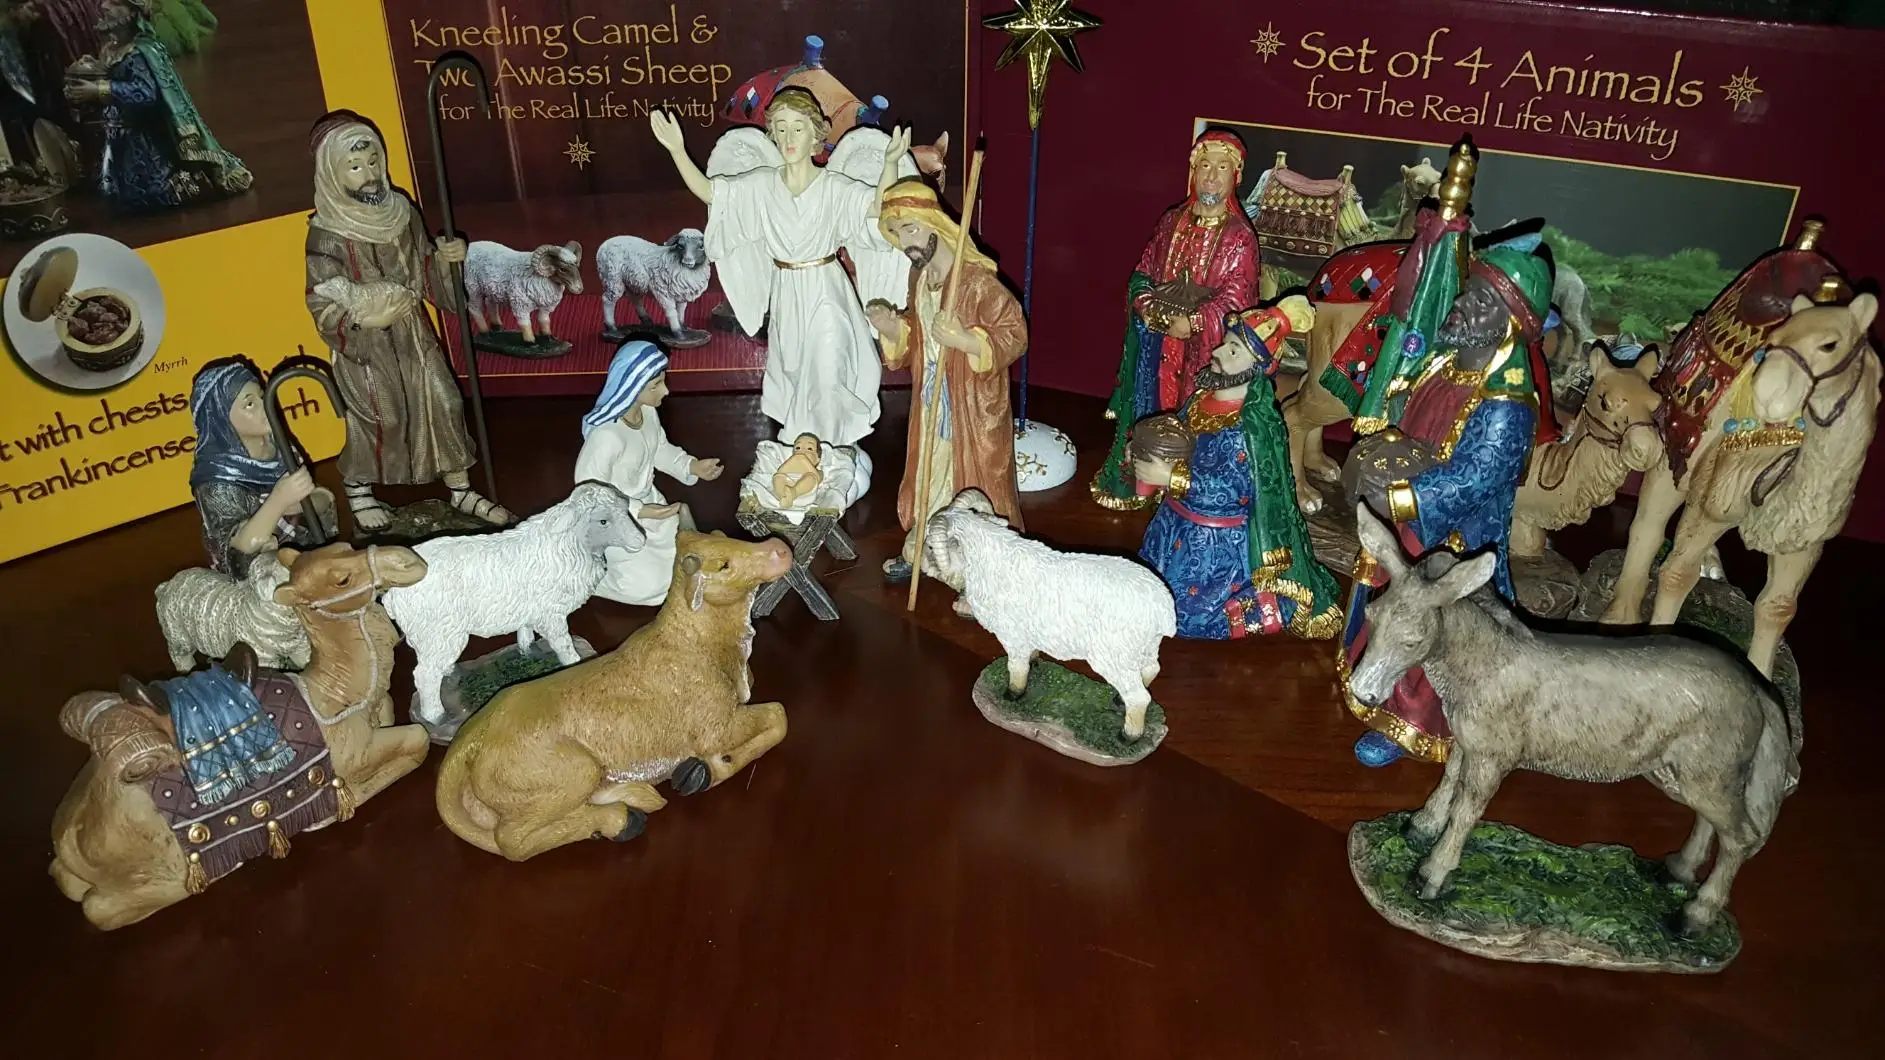 wholesale custom home decoration polyresin catholic religious holy family statue christmas crib nativity set